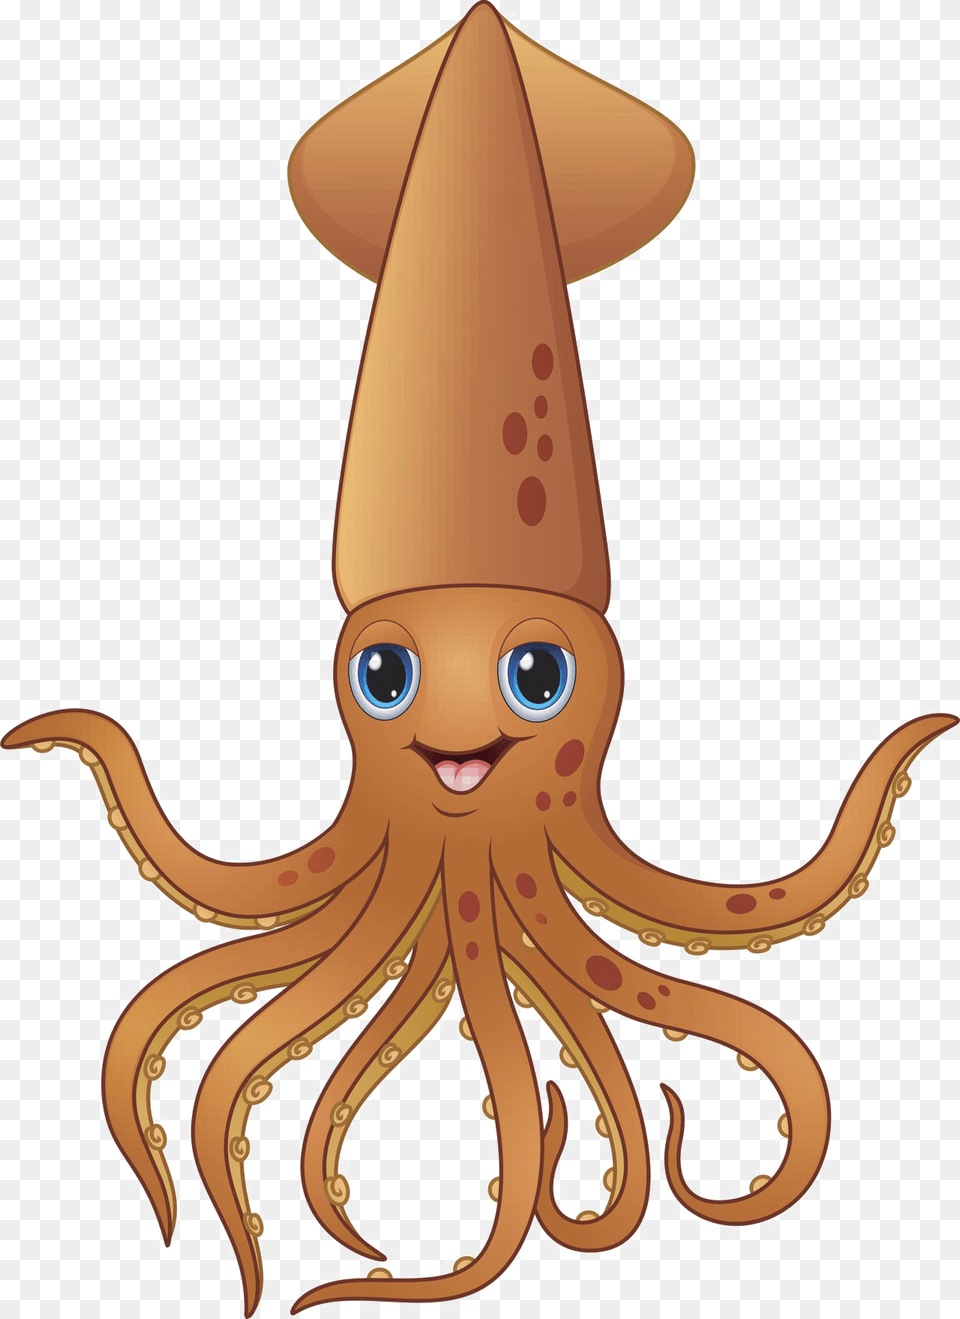 Cartoon Squid Vector, Animal, Seafood, Sea Life, Food Png Image